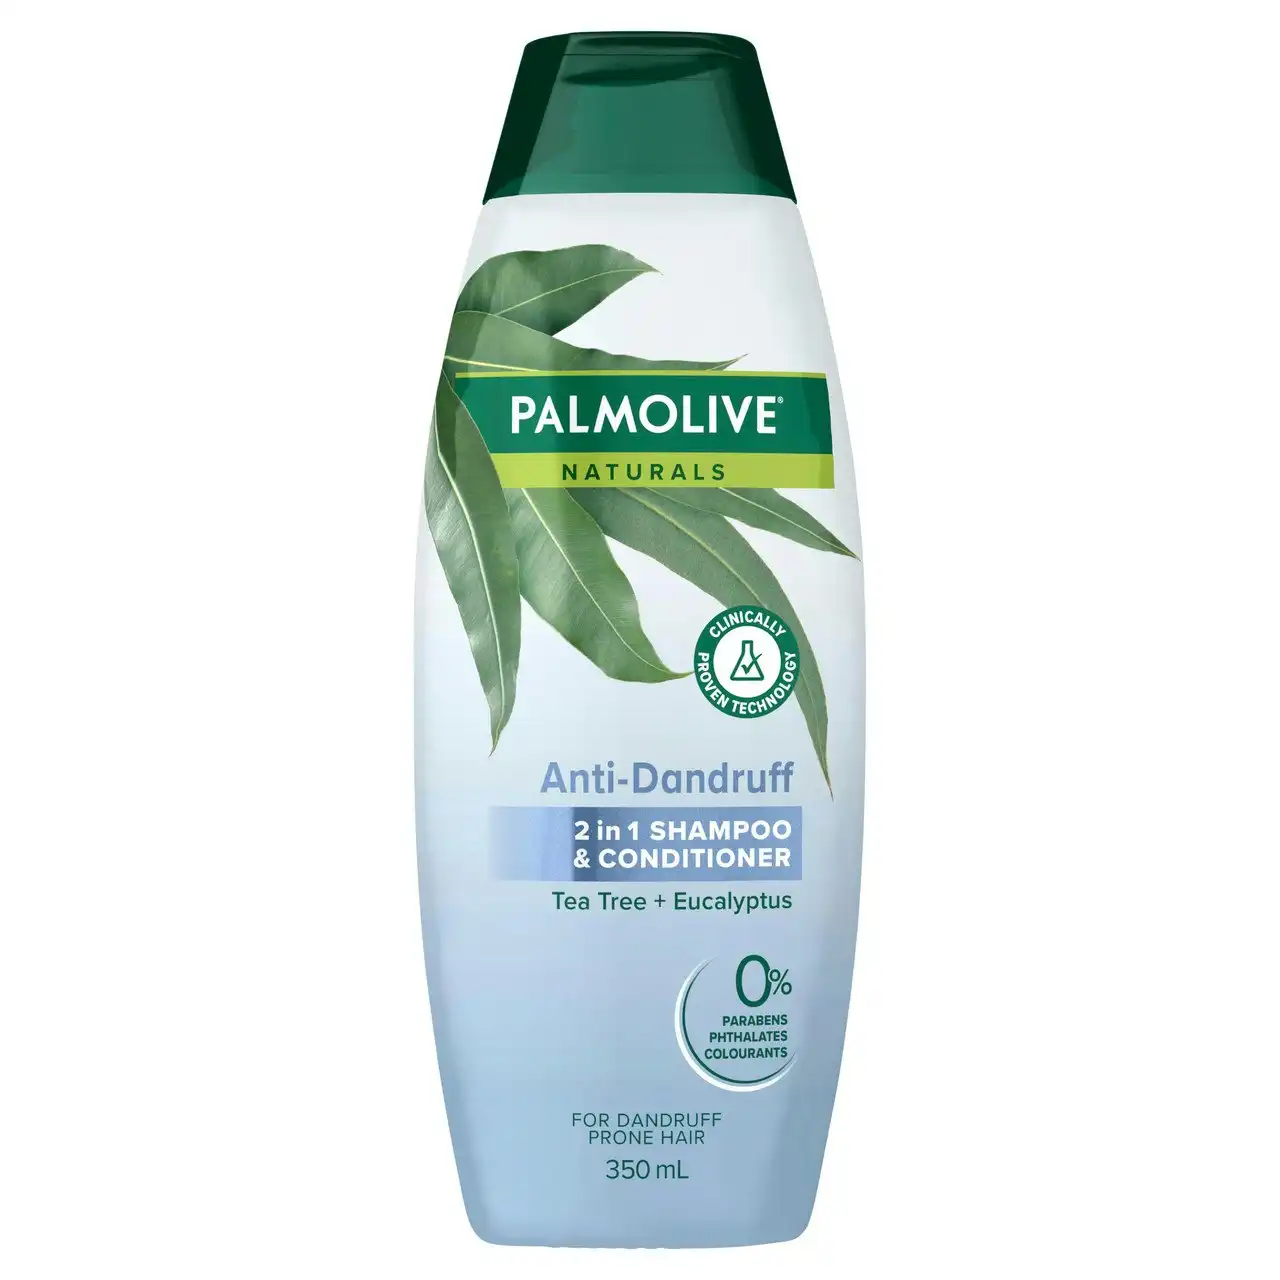 Palmolive Naturals Anti Dandruff 2 in 1 Hair Shampoo and Conditioner, 350mL, Tea Tree & Eucalyptus for Dandruff Prone Hair